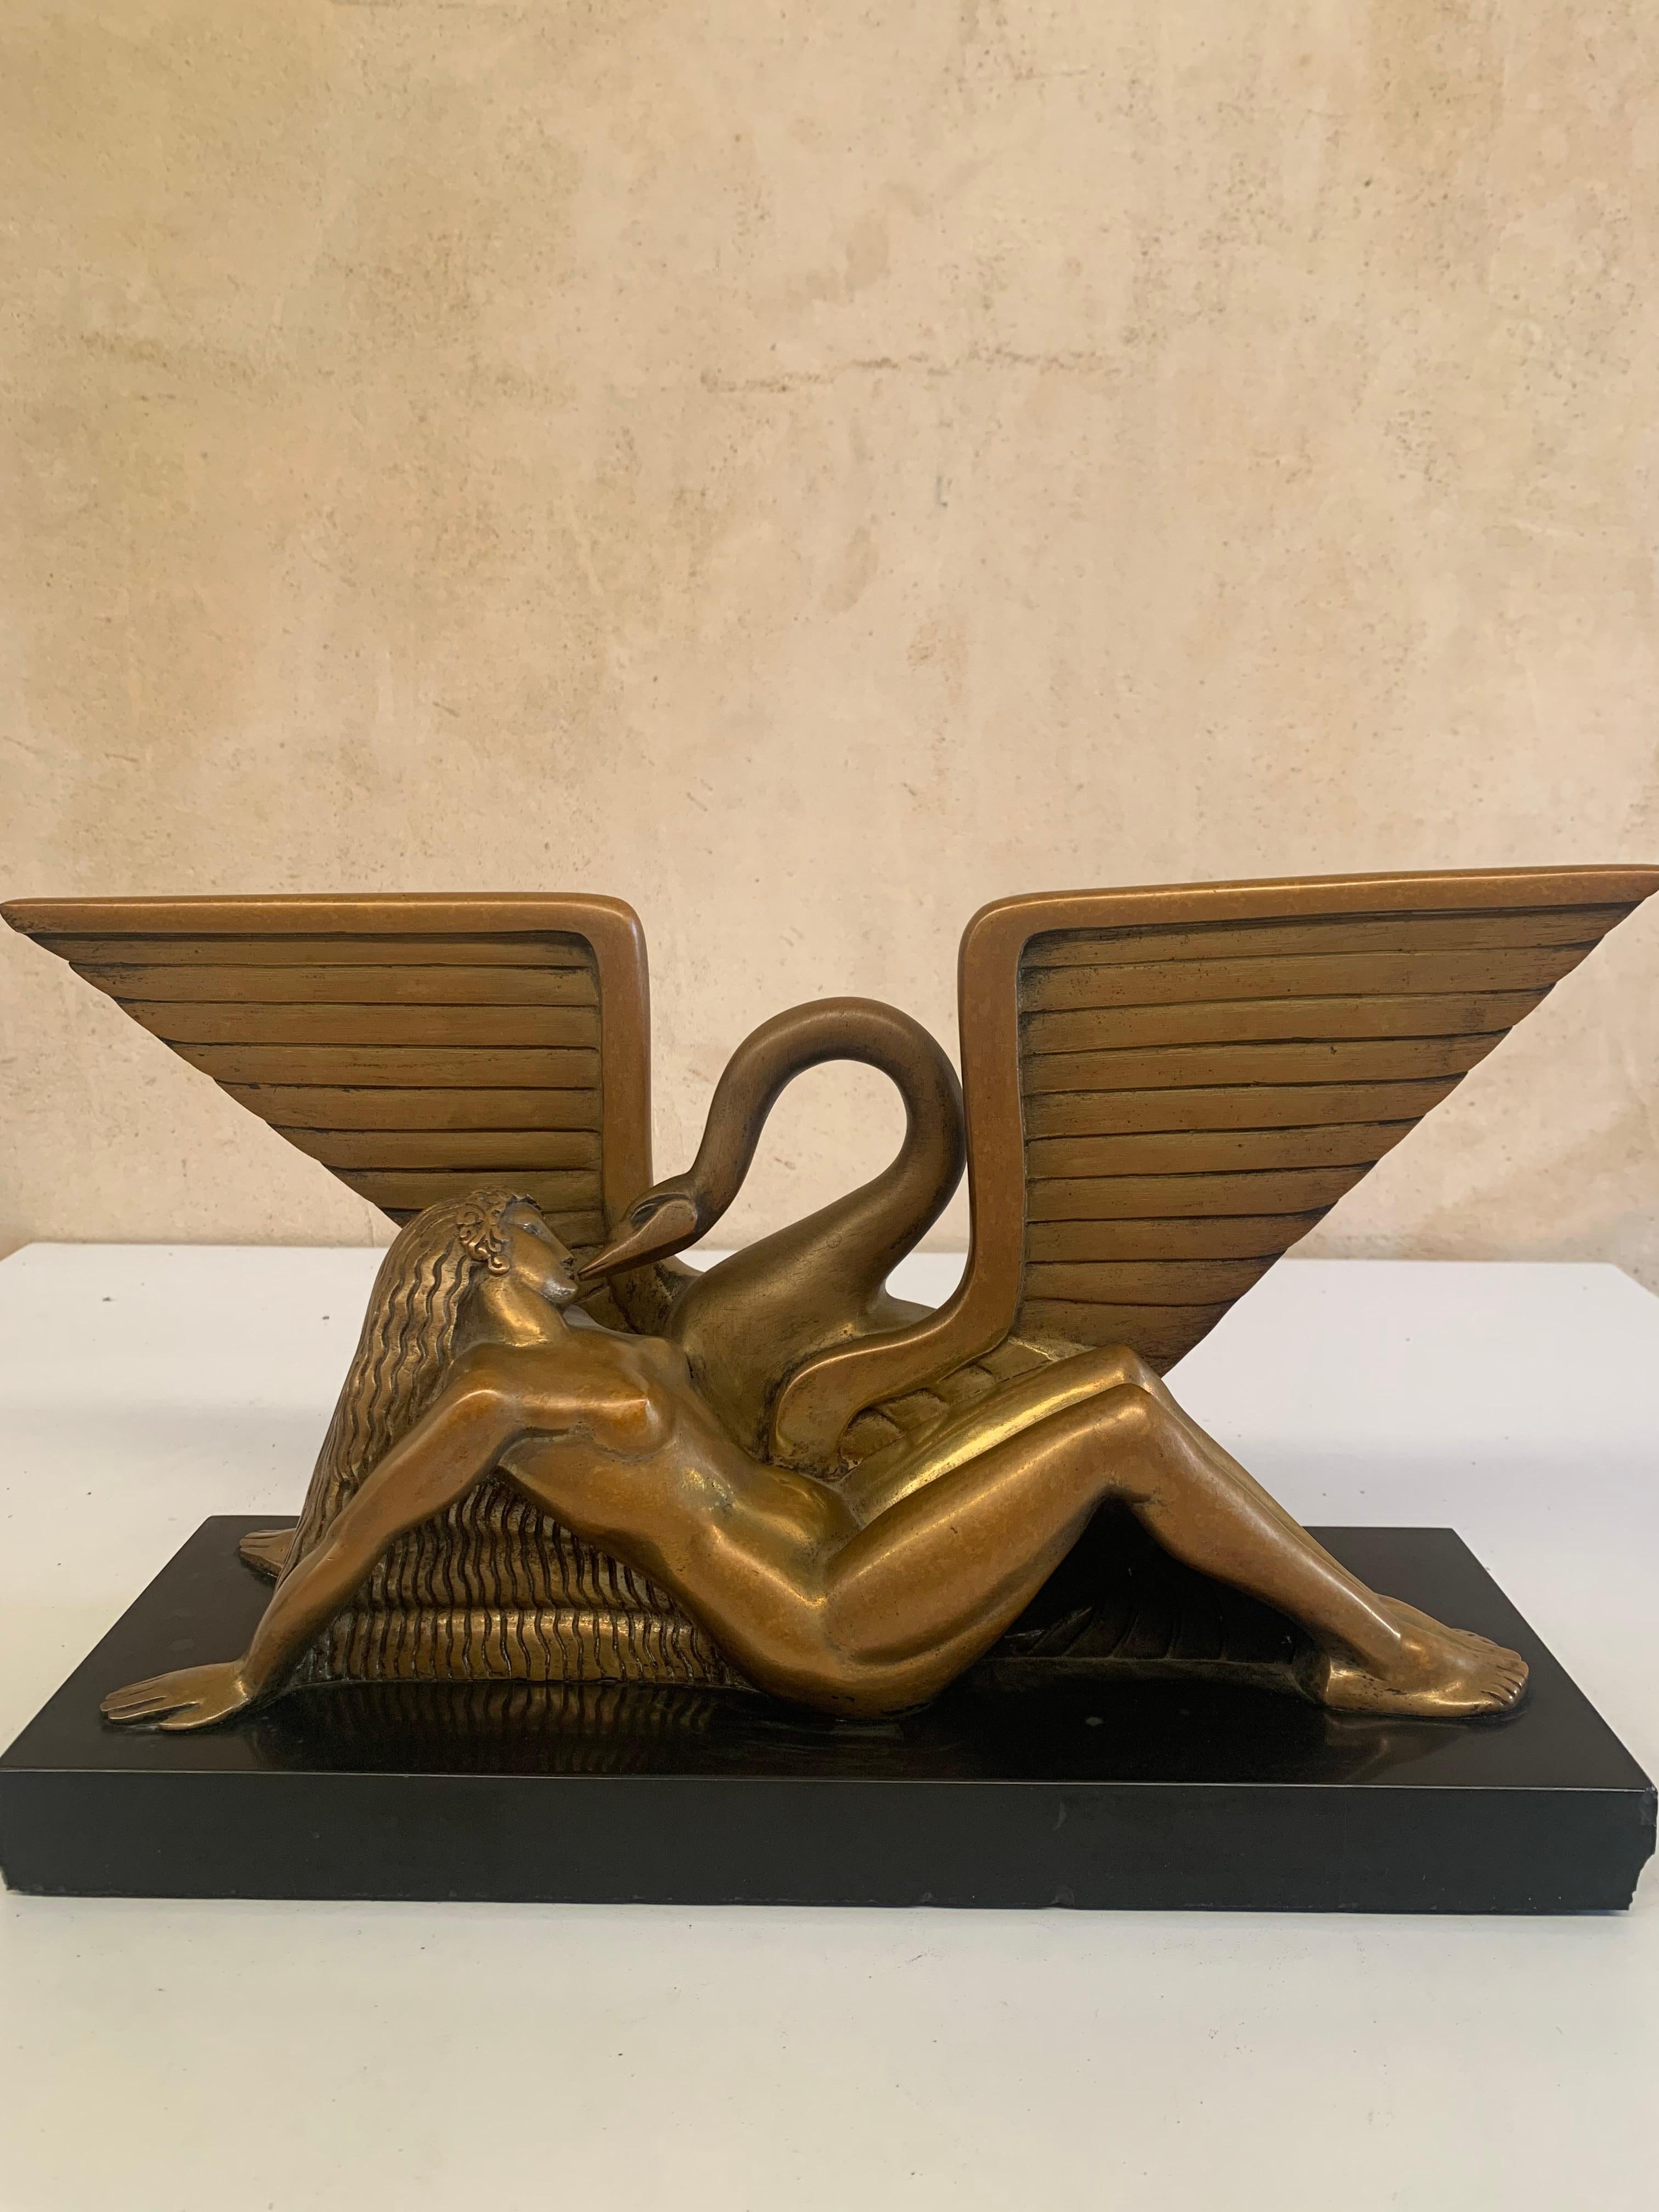 Exquisite bronze sculpture by Marcel- Andre Bouraine, 